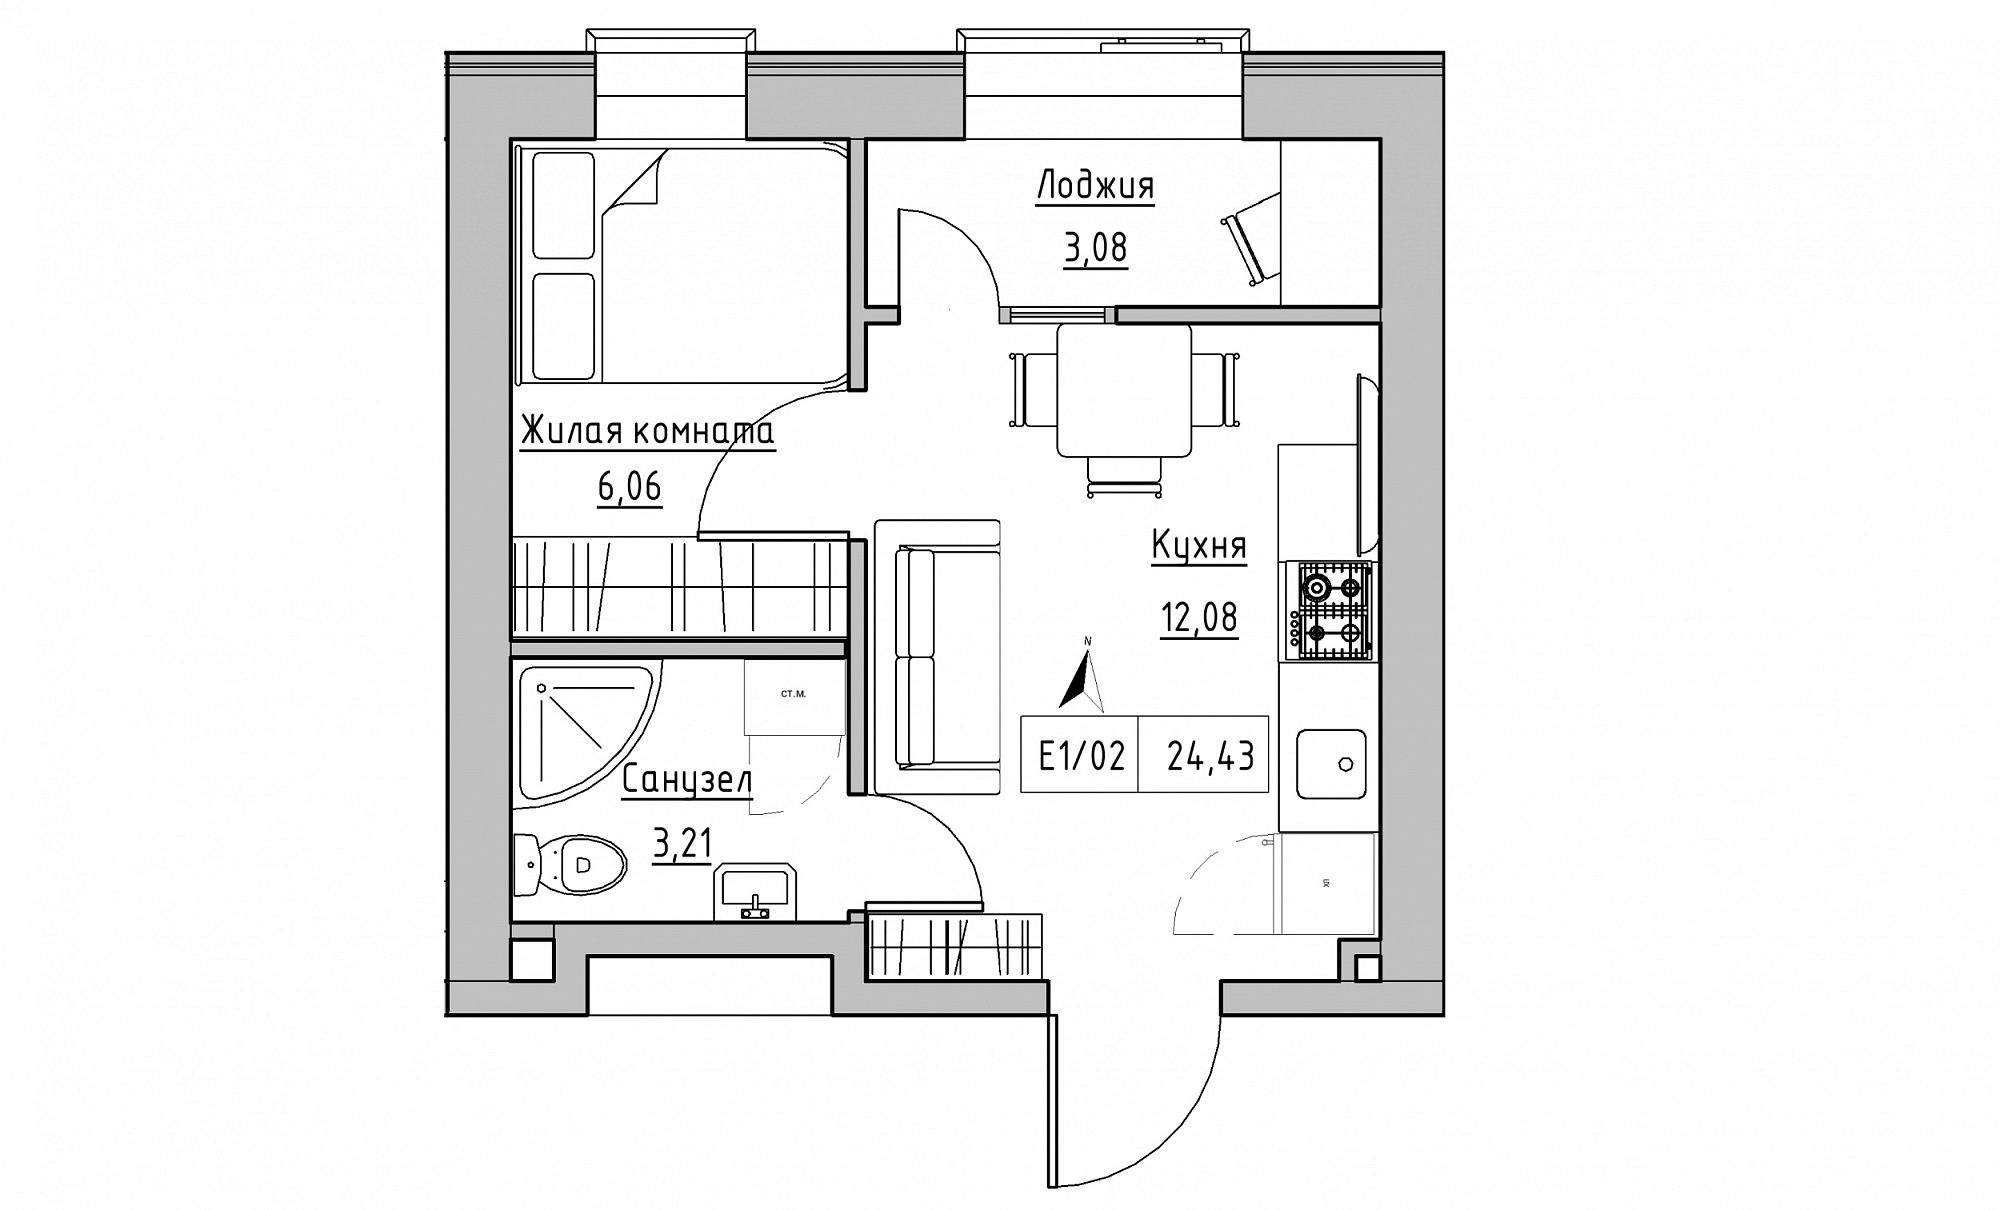 Planning 1-rm flats area 24.43m2, KS-015-02/0014.